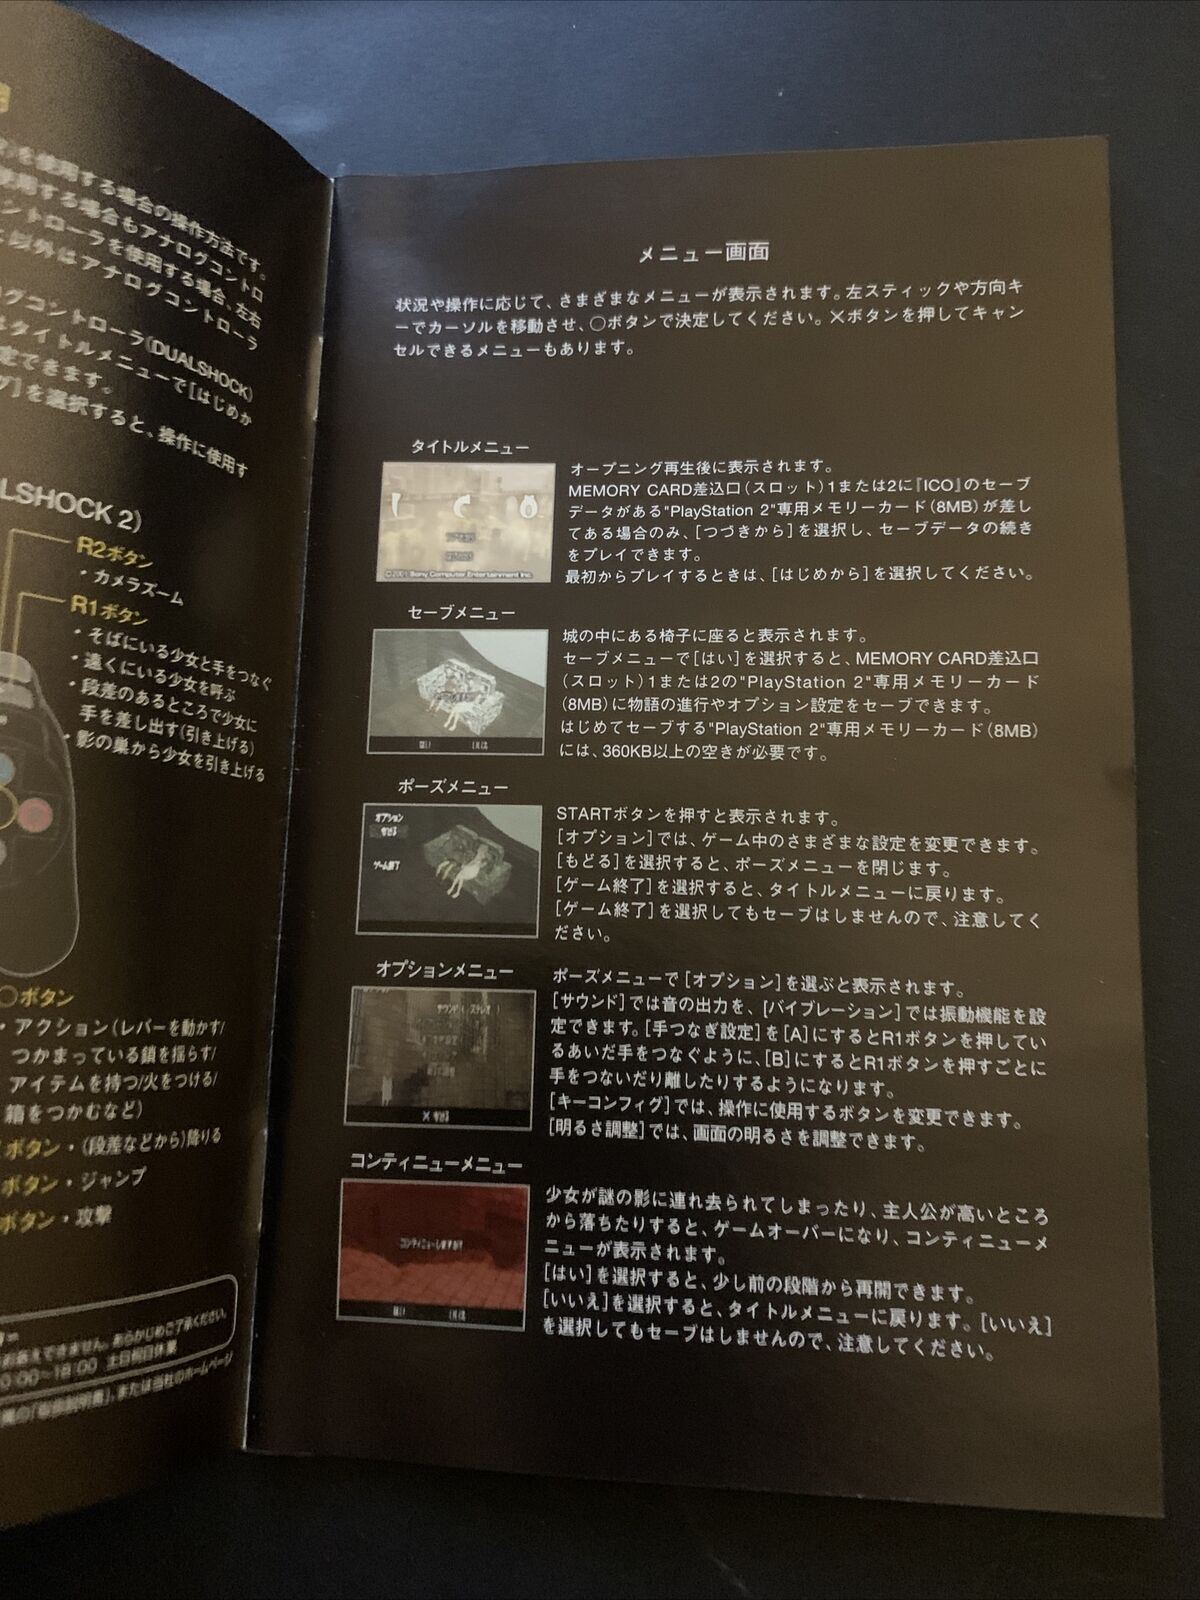 ICO - Sony Playstation 2 PS2 NTSC-J Japan Game w Manual